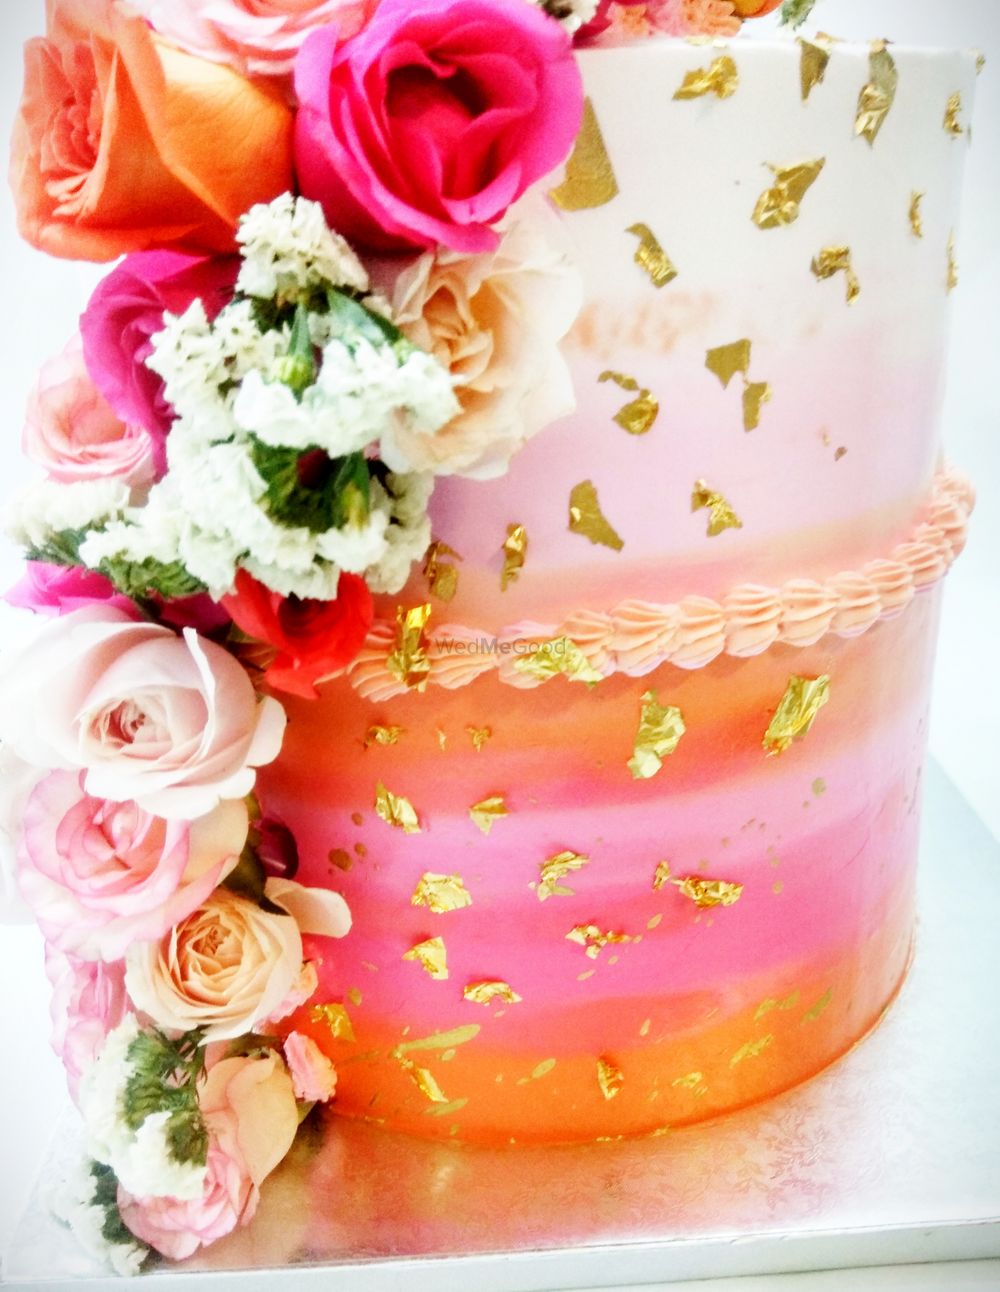 Photo By Krishya's Sweet Treats - Cake